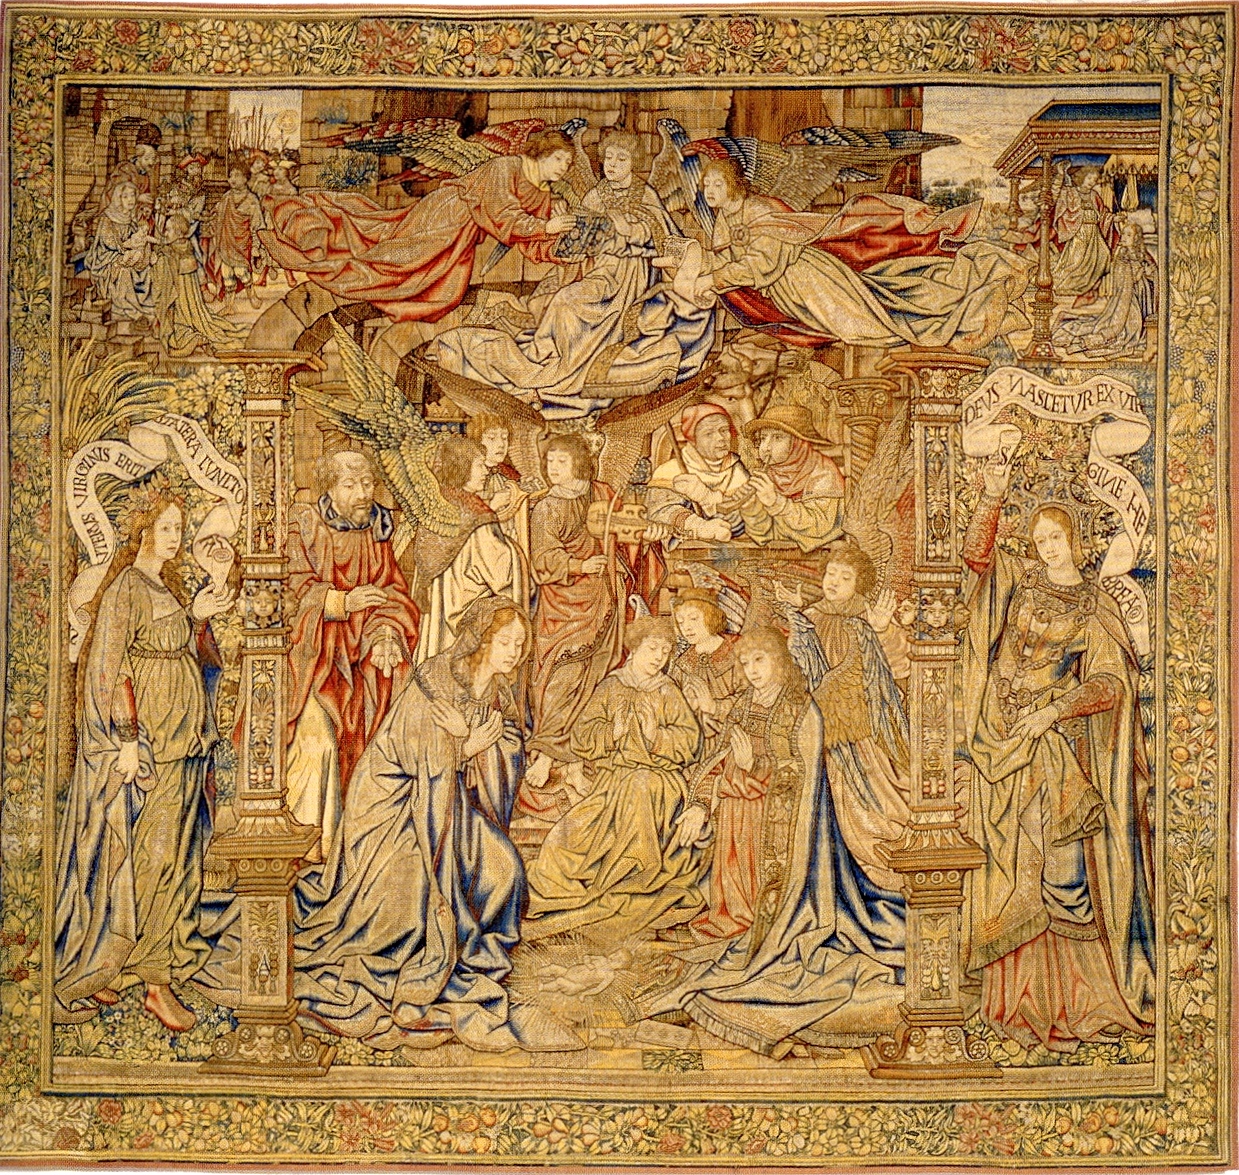 Wandteppich (Die Geburt Christi) by Jan van Roome - ca. 1520 - 275 x 260 cm Iparművészeti Múzeum, Budapest